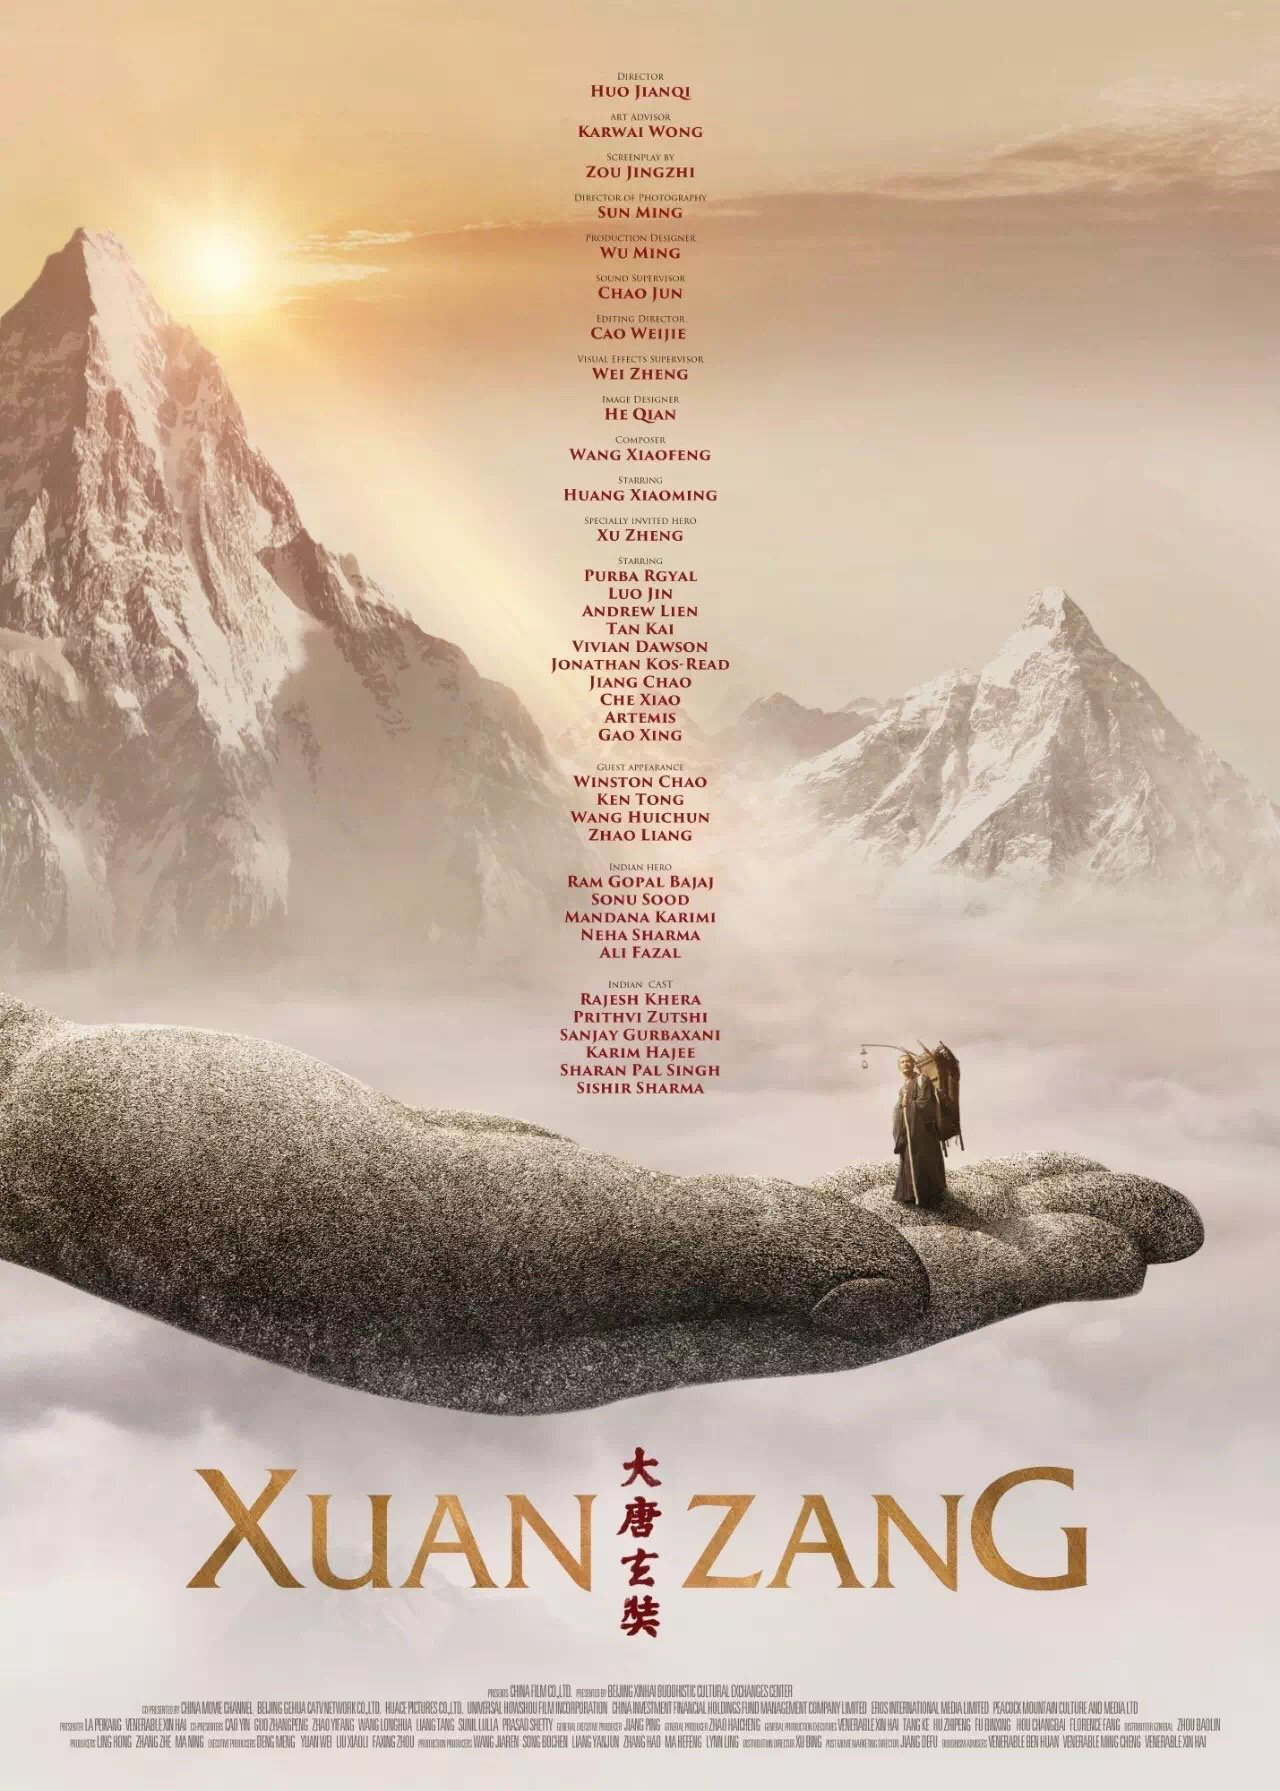 Xuan Zang Film Poster 2016.jpg